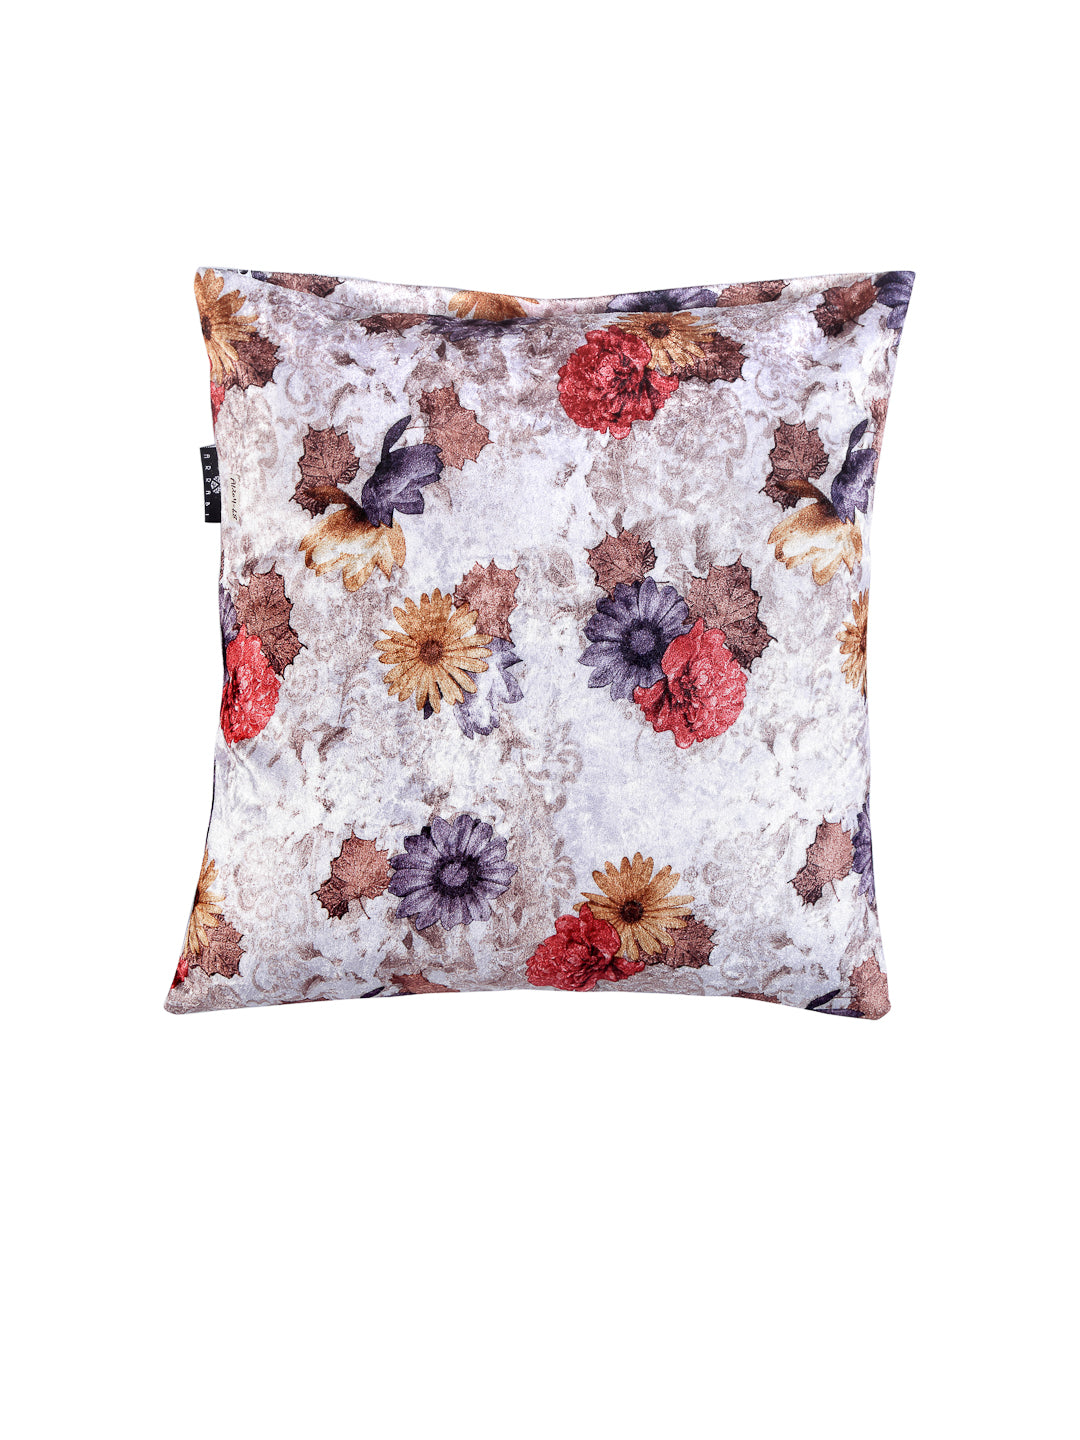 Arrabi Multi Floral TC Chenille Cotton Blend Cushion Covers (Pack of 5) (40 x 40 cm)